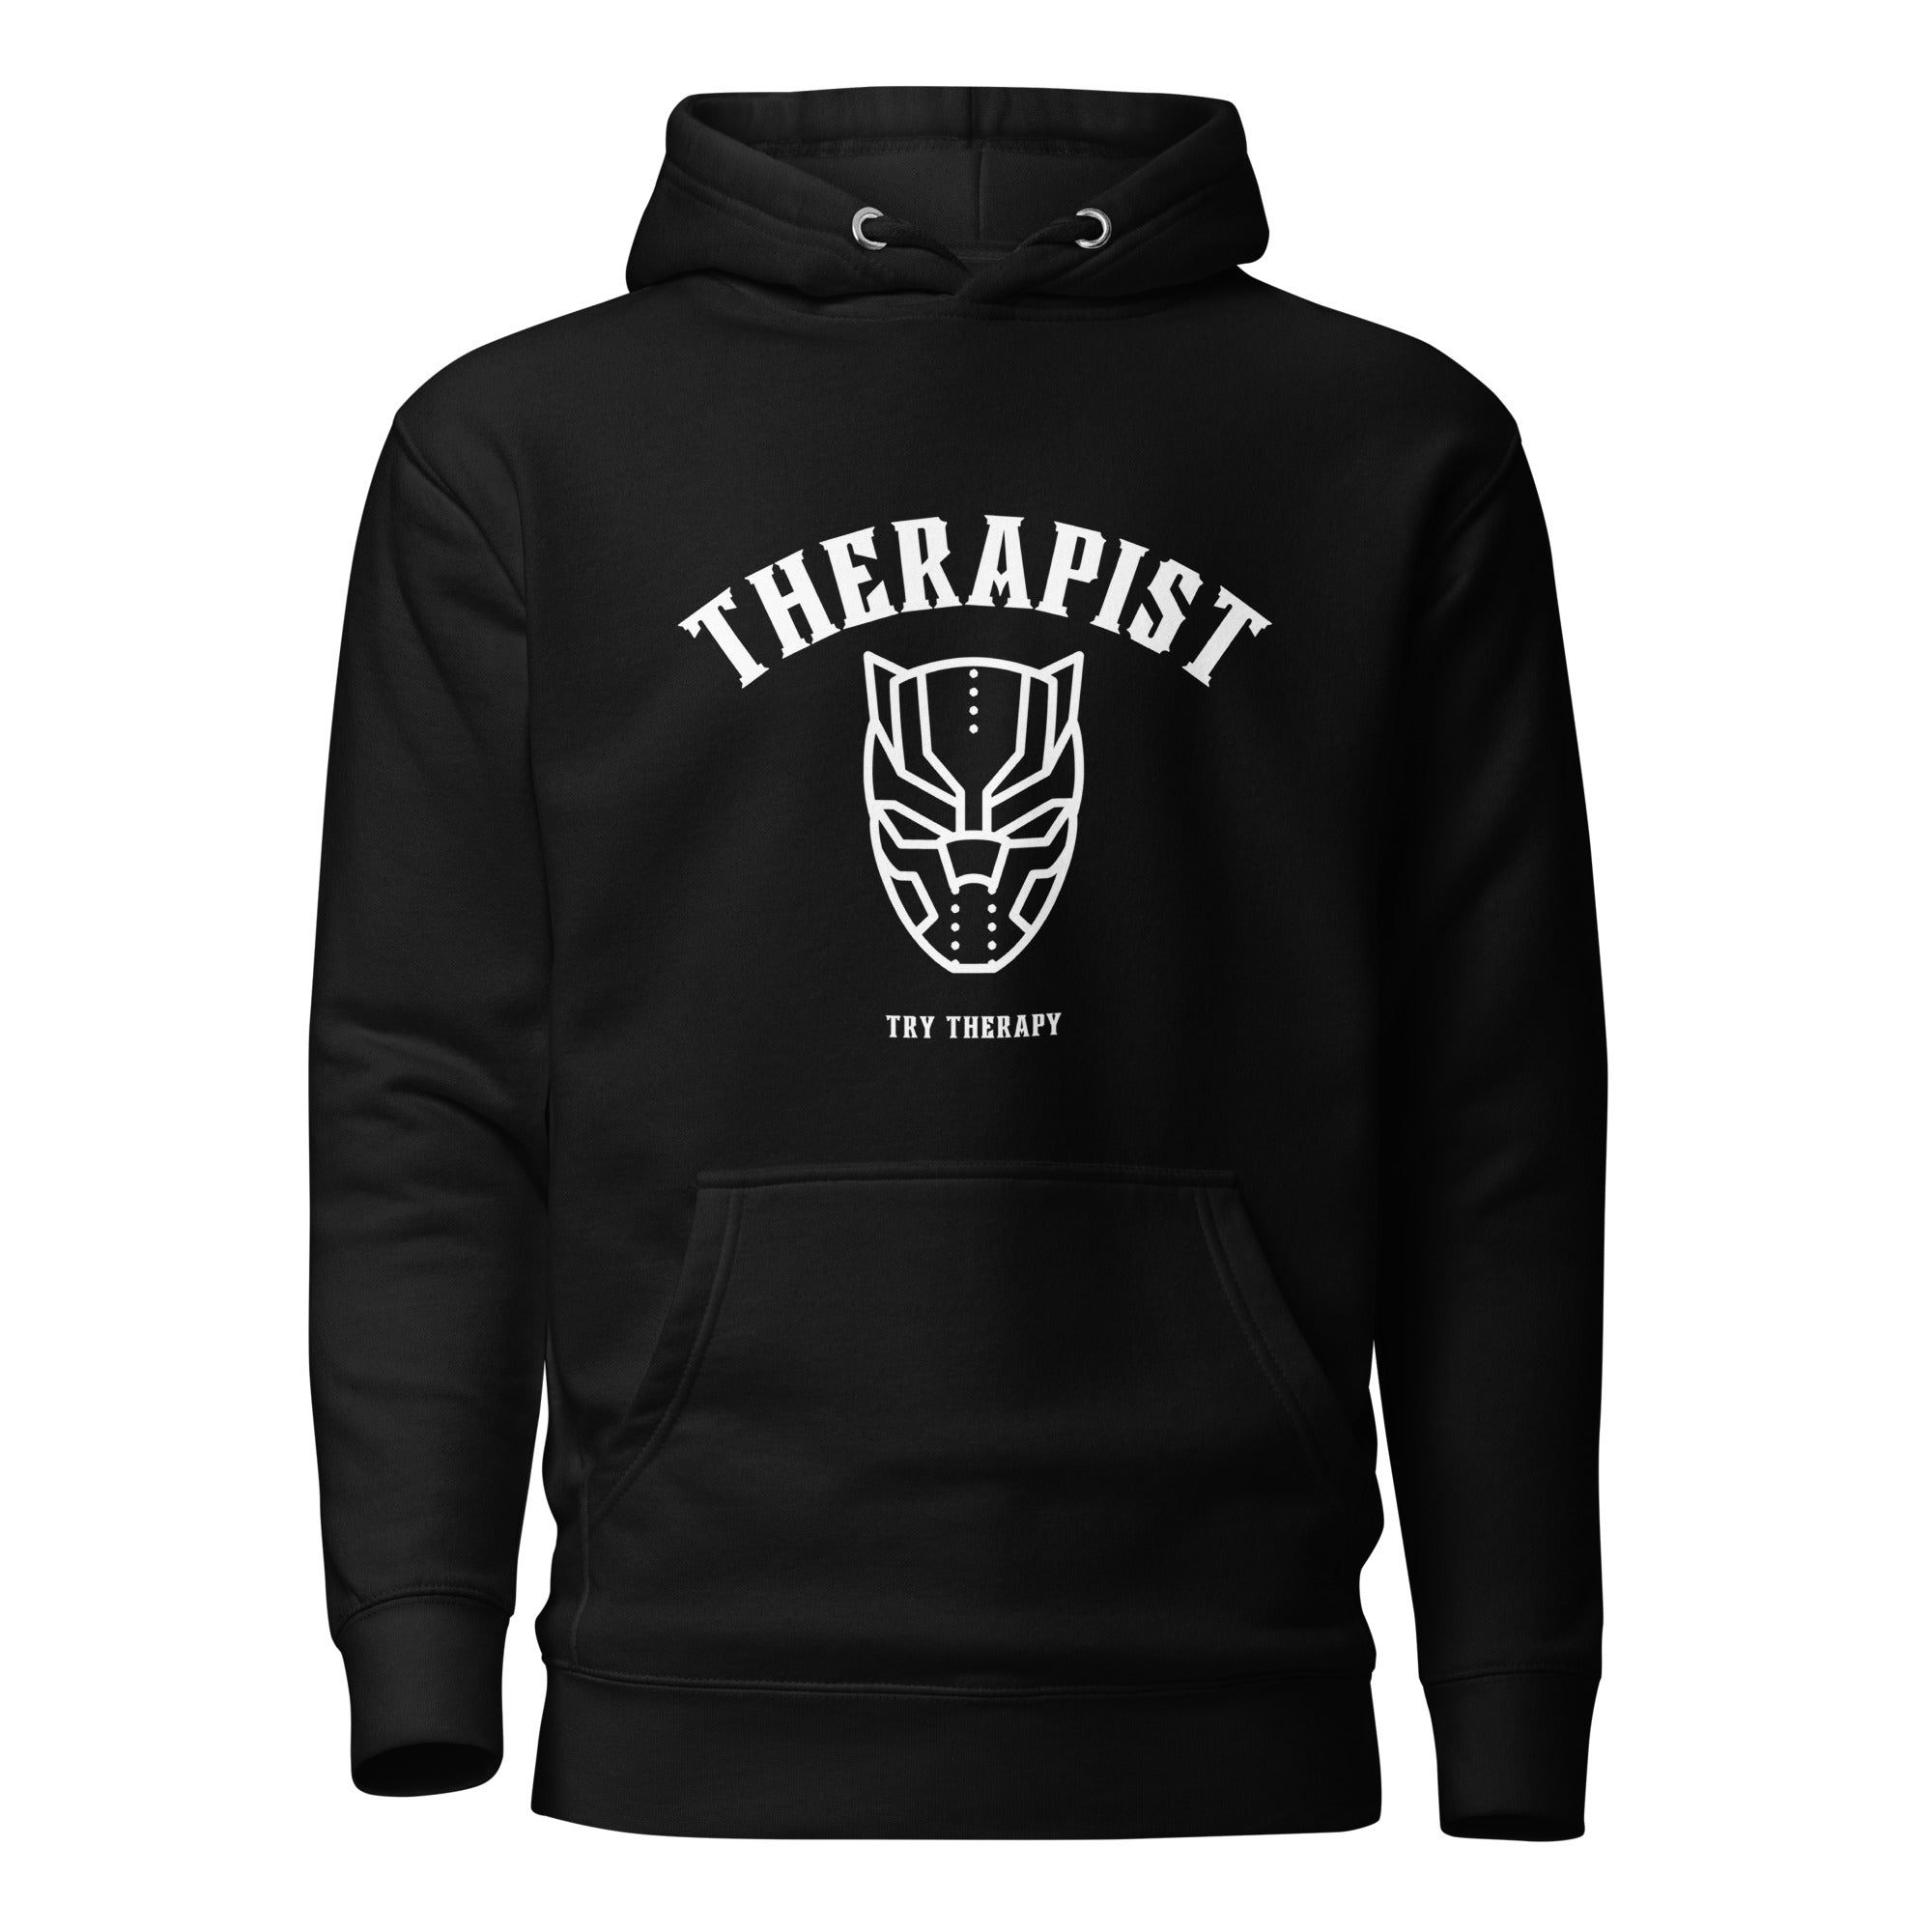 BP Therapist Mask Sweatsuit Set - Premium Hoodie